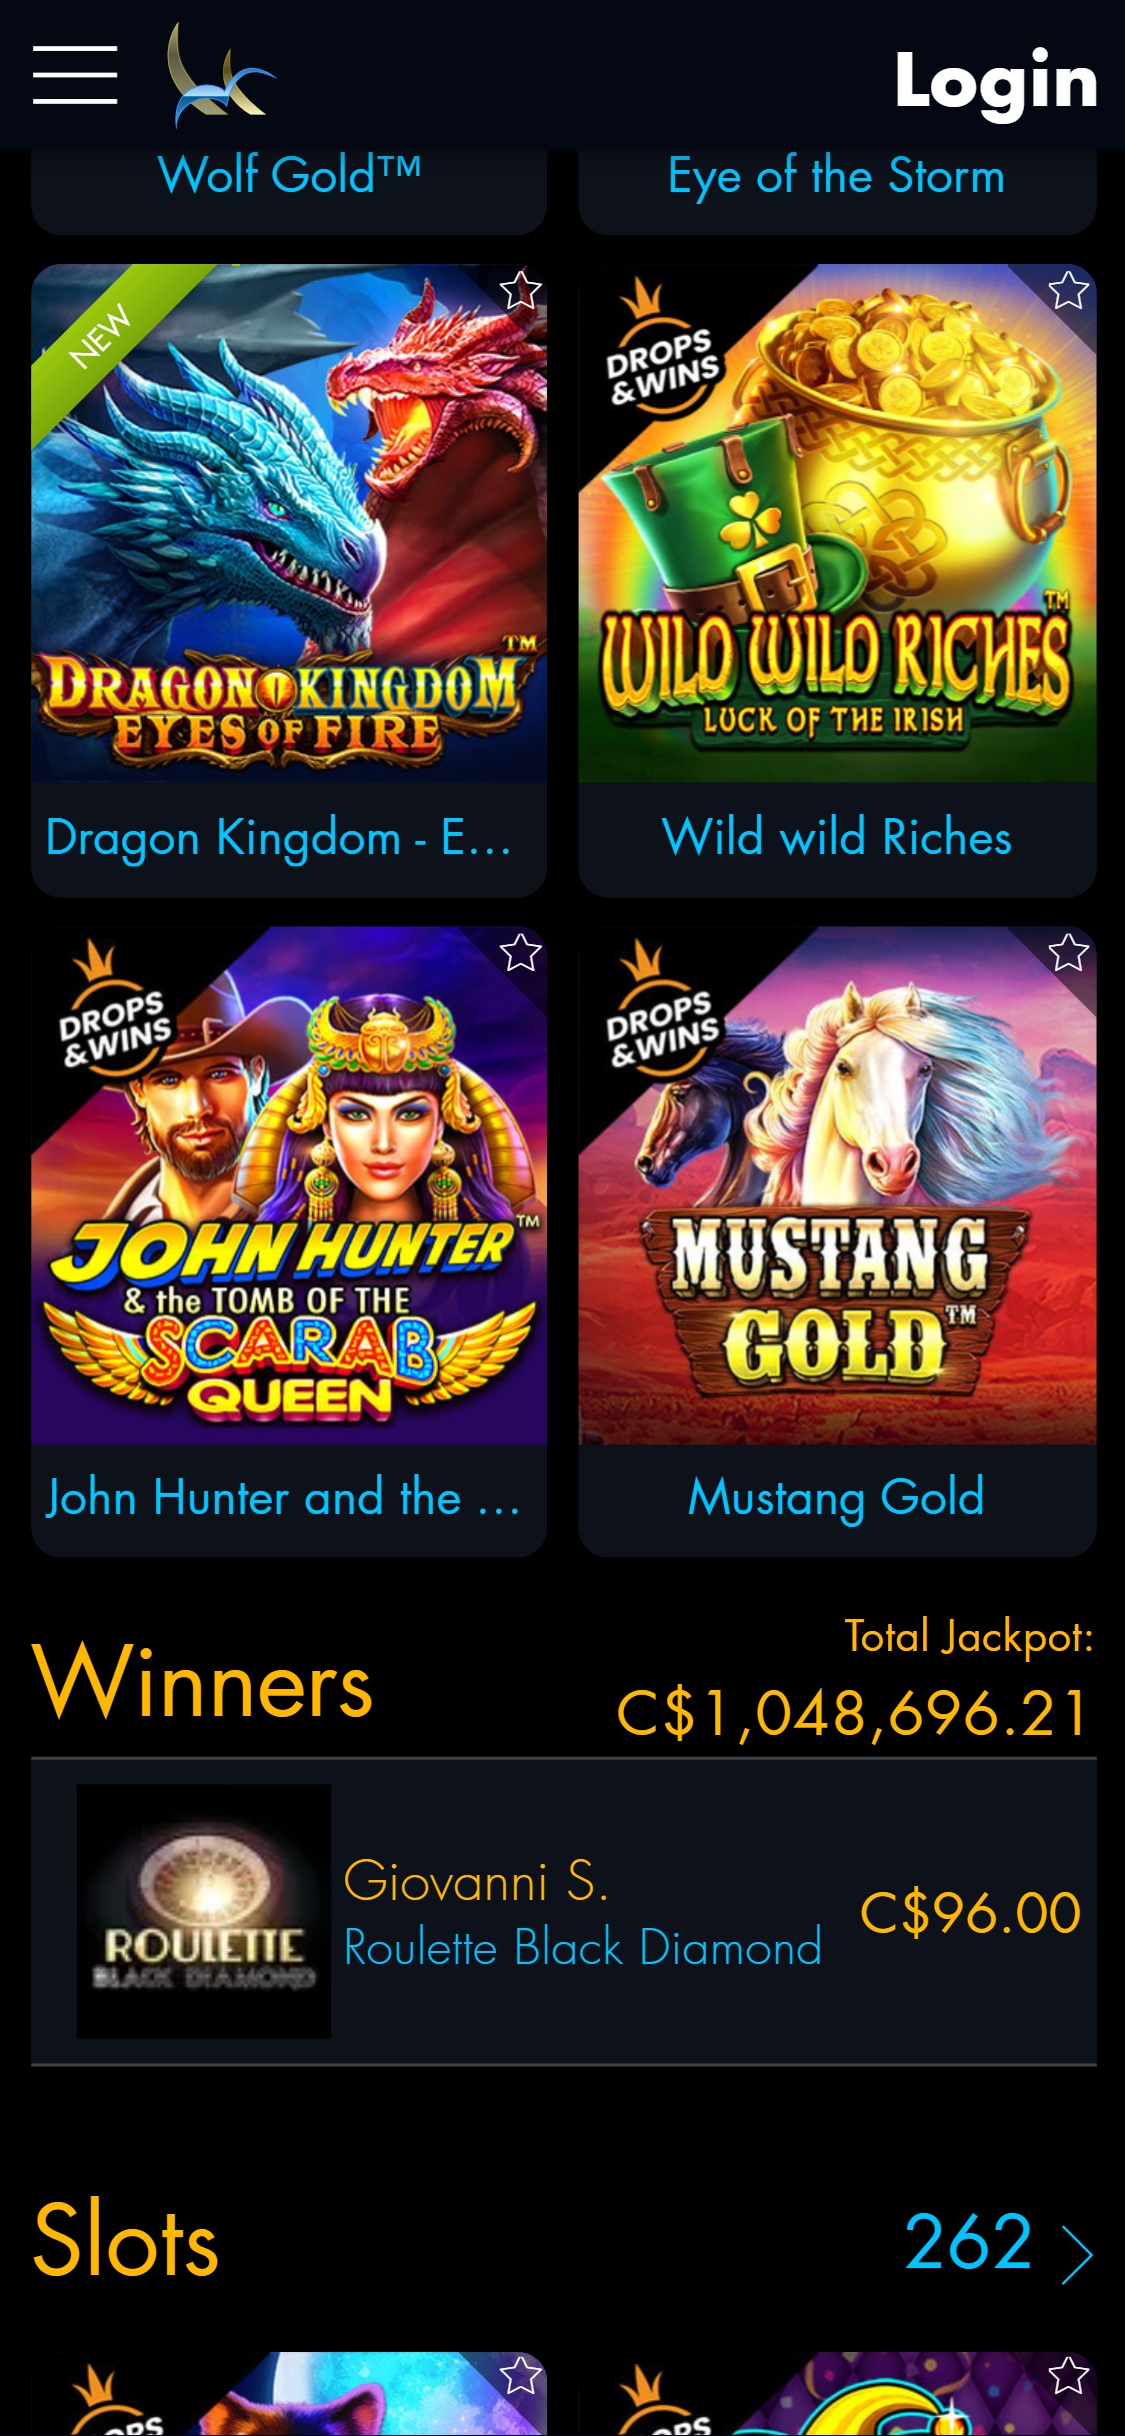 Winward Casino Mobile Games Review